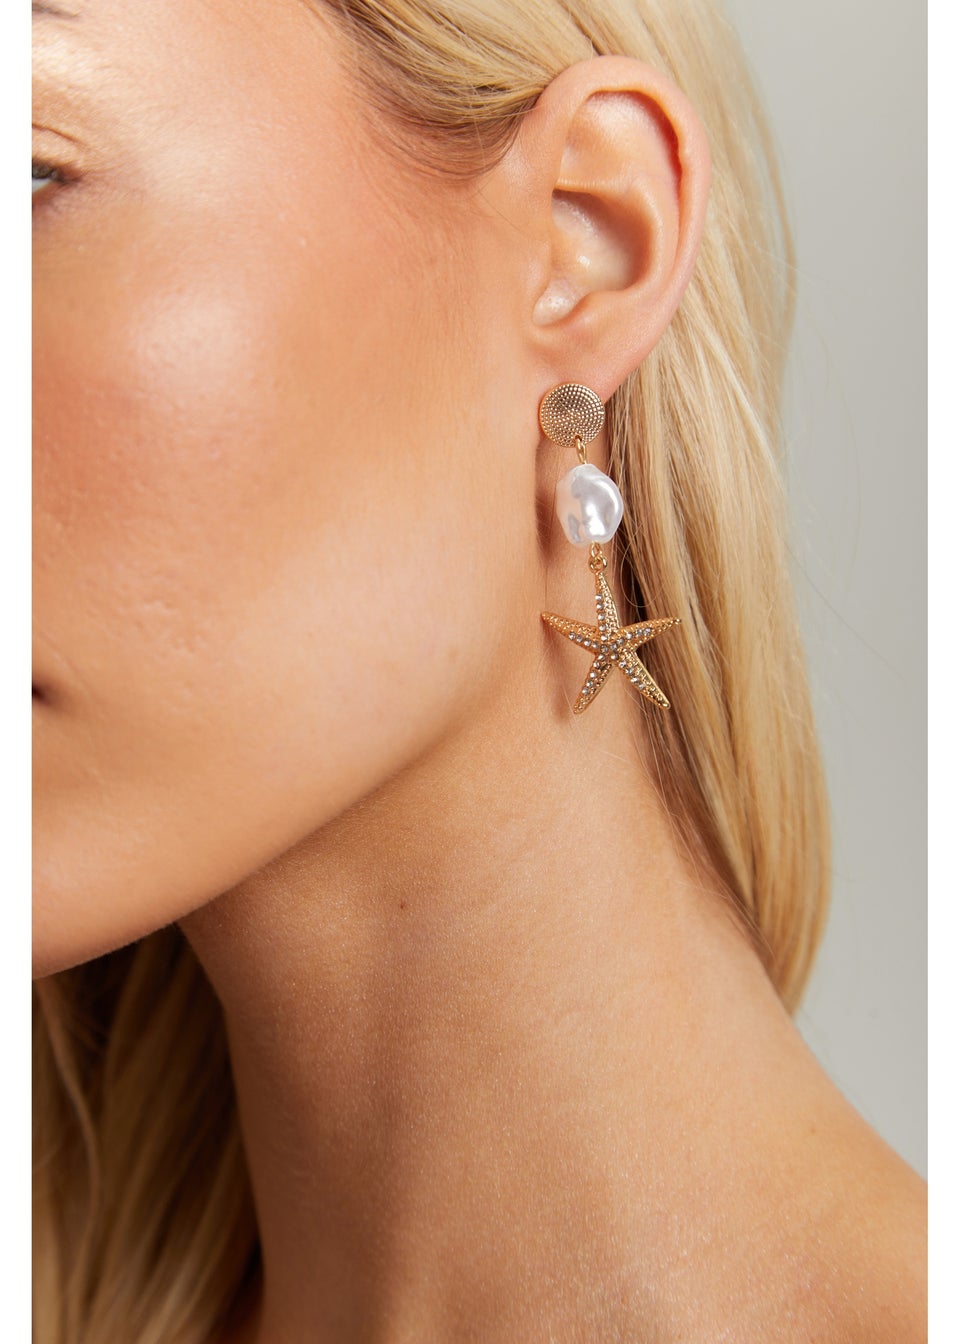 Madein Pink Pearl Starfish Earrings